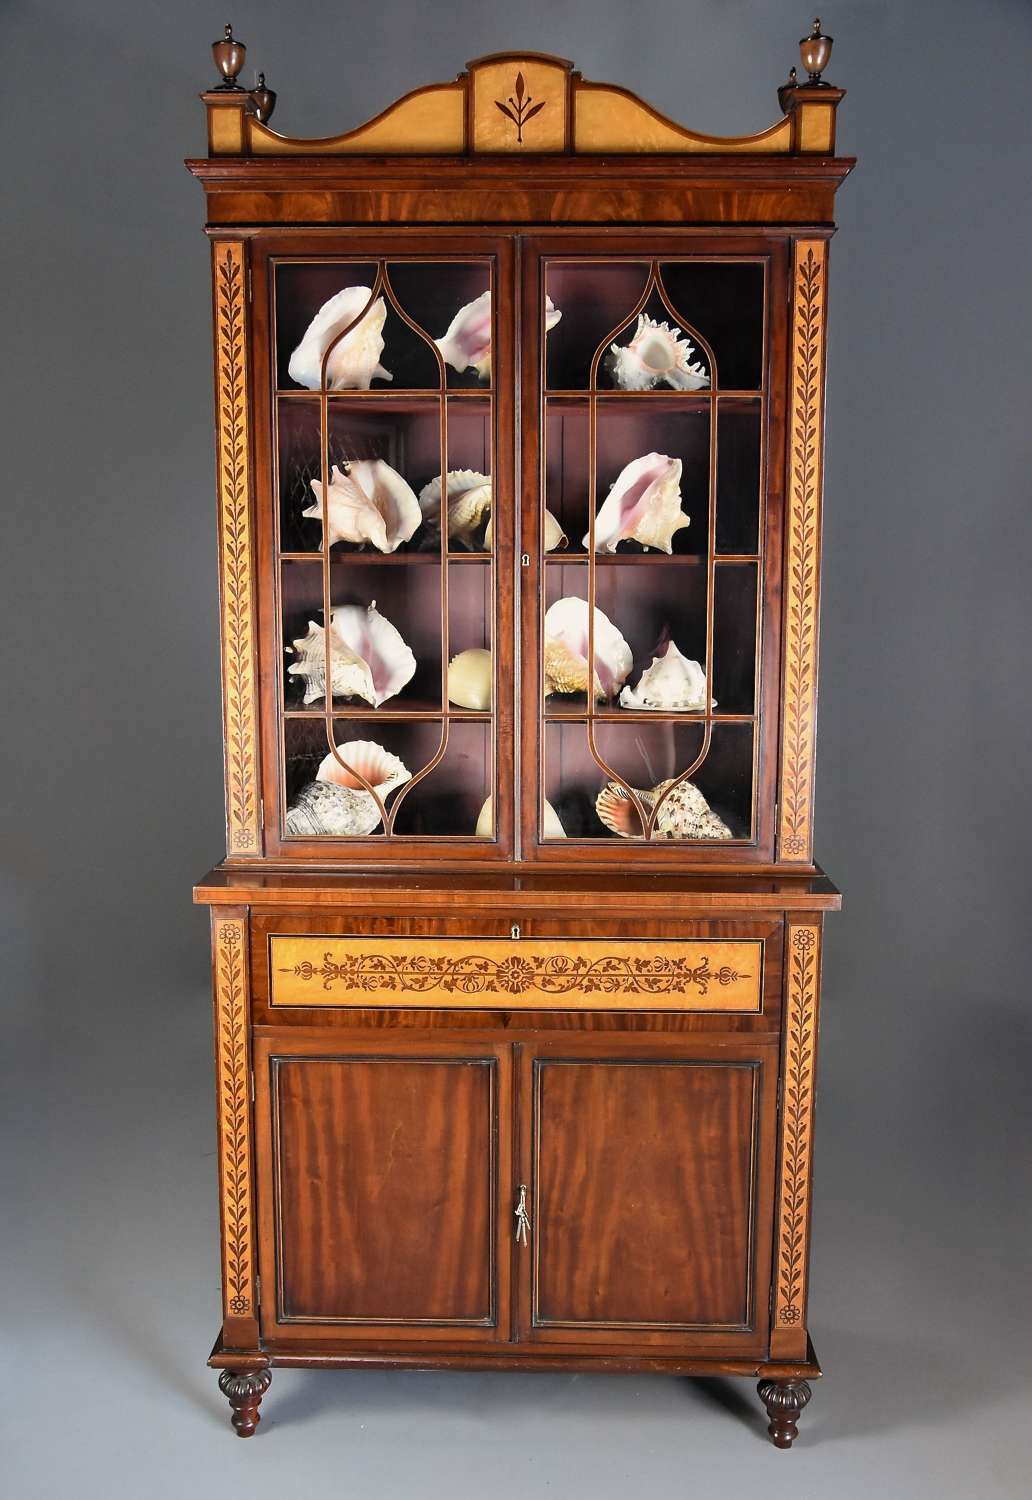 Fine quality early 19thc mahogany & maple secretaire bookcase